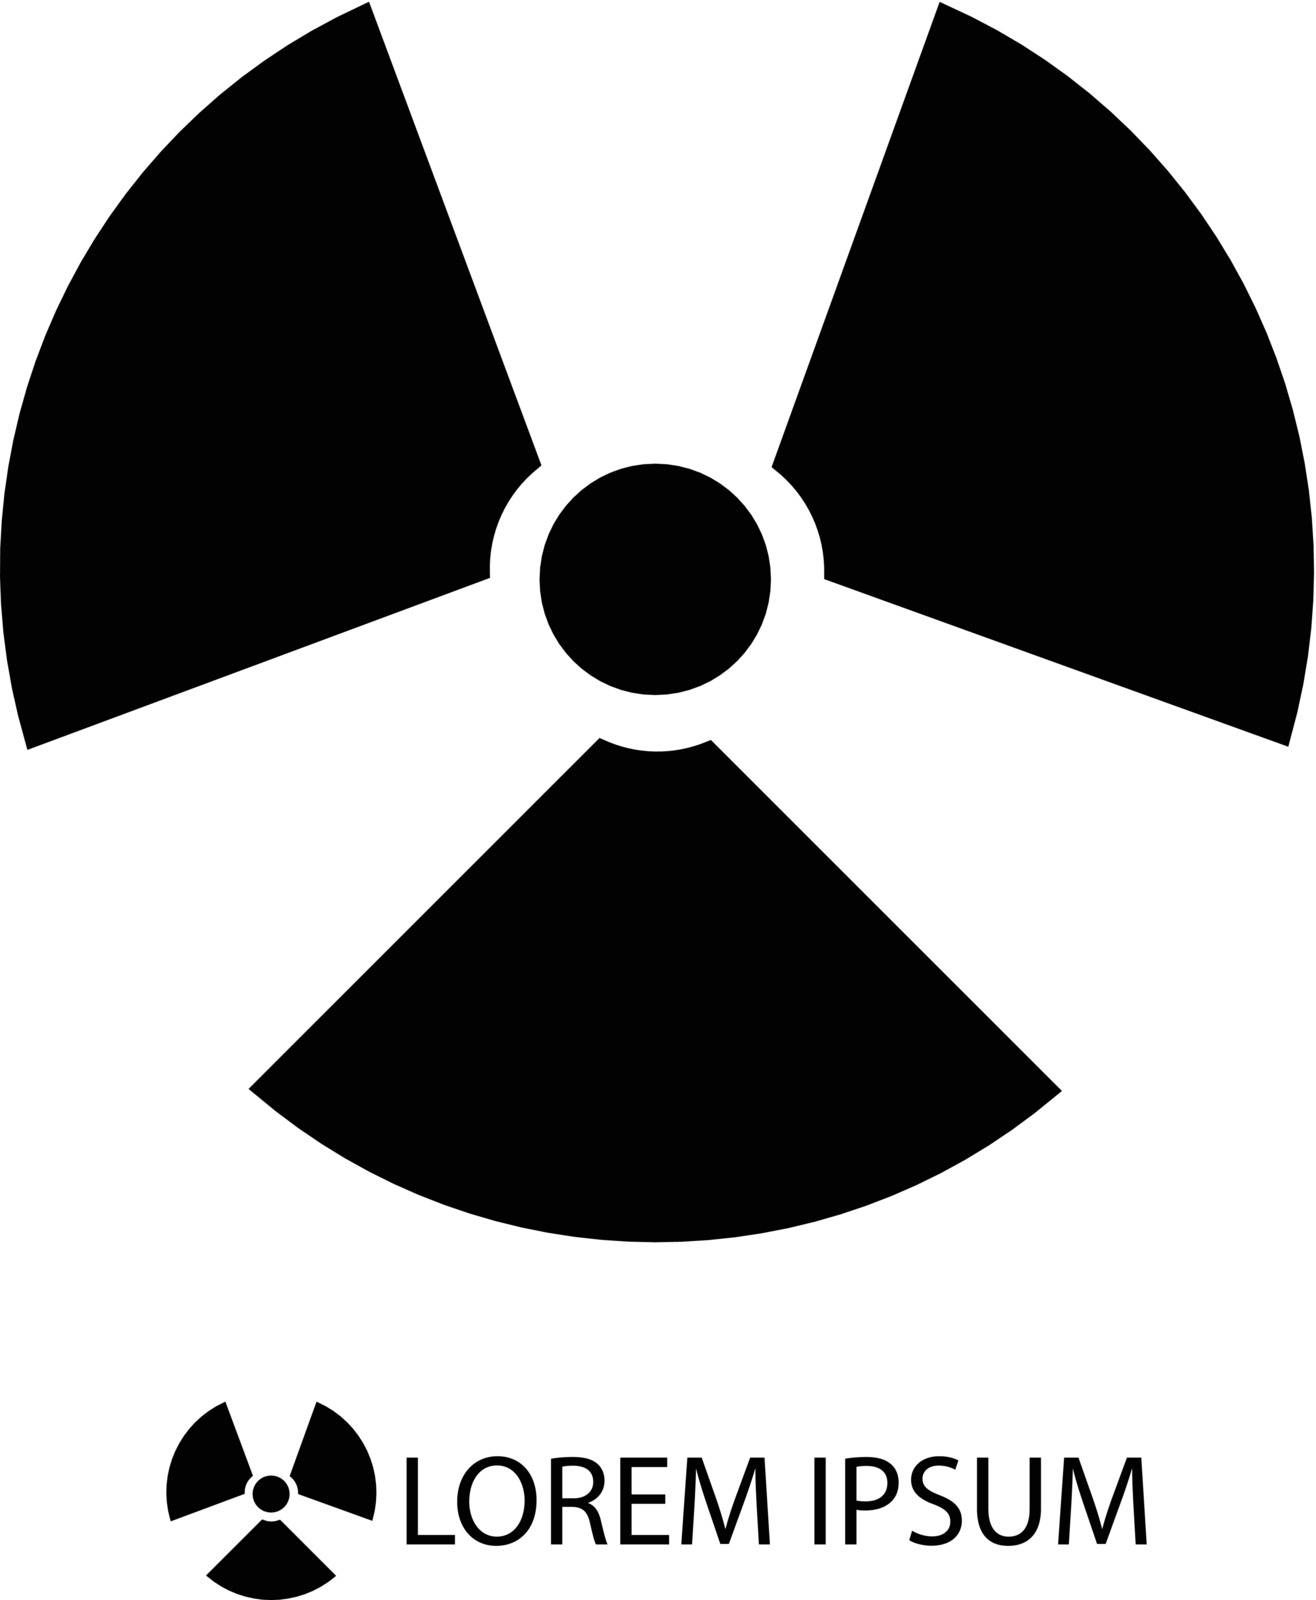 Black radiation sign by rinika